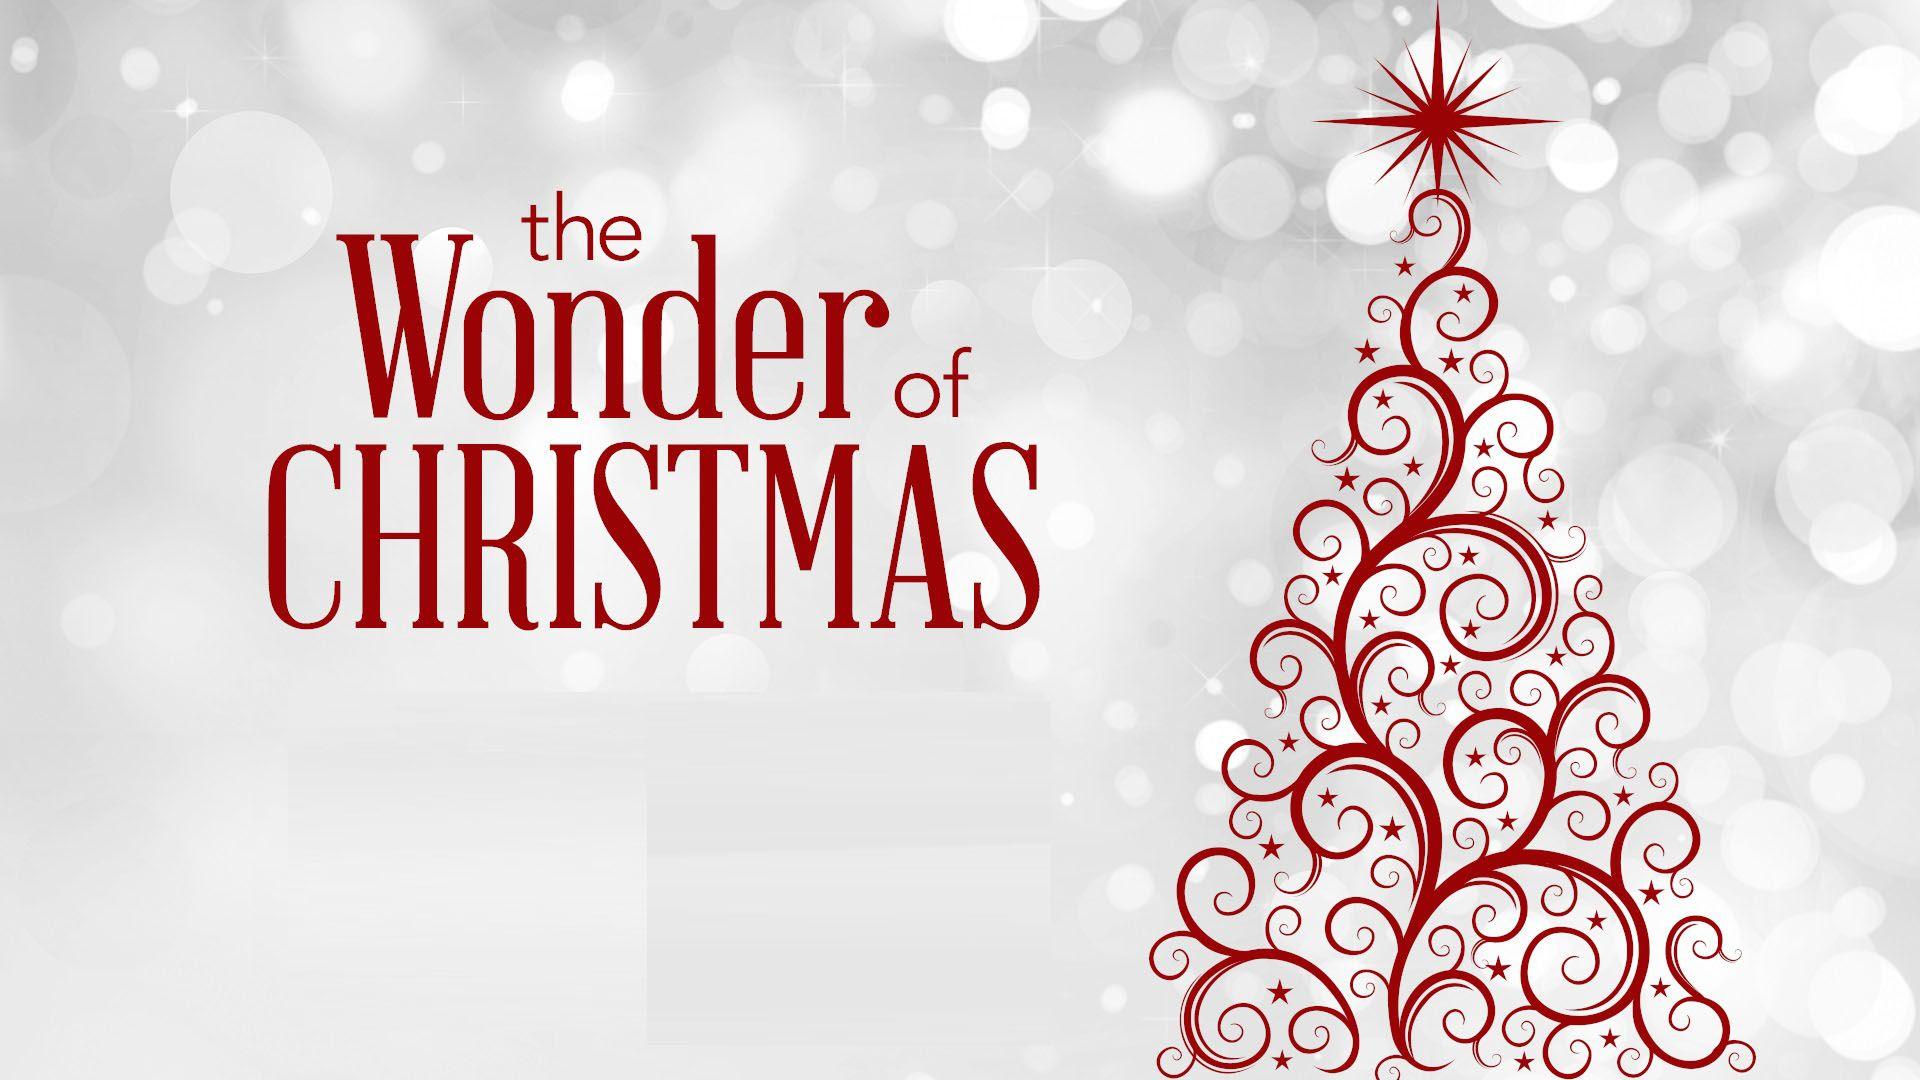 The Wonders of Christmas